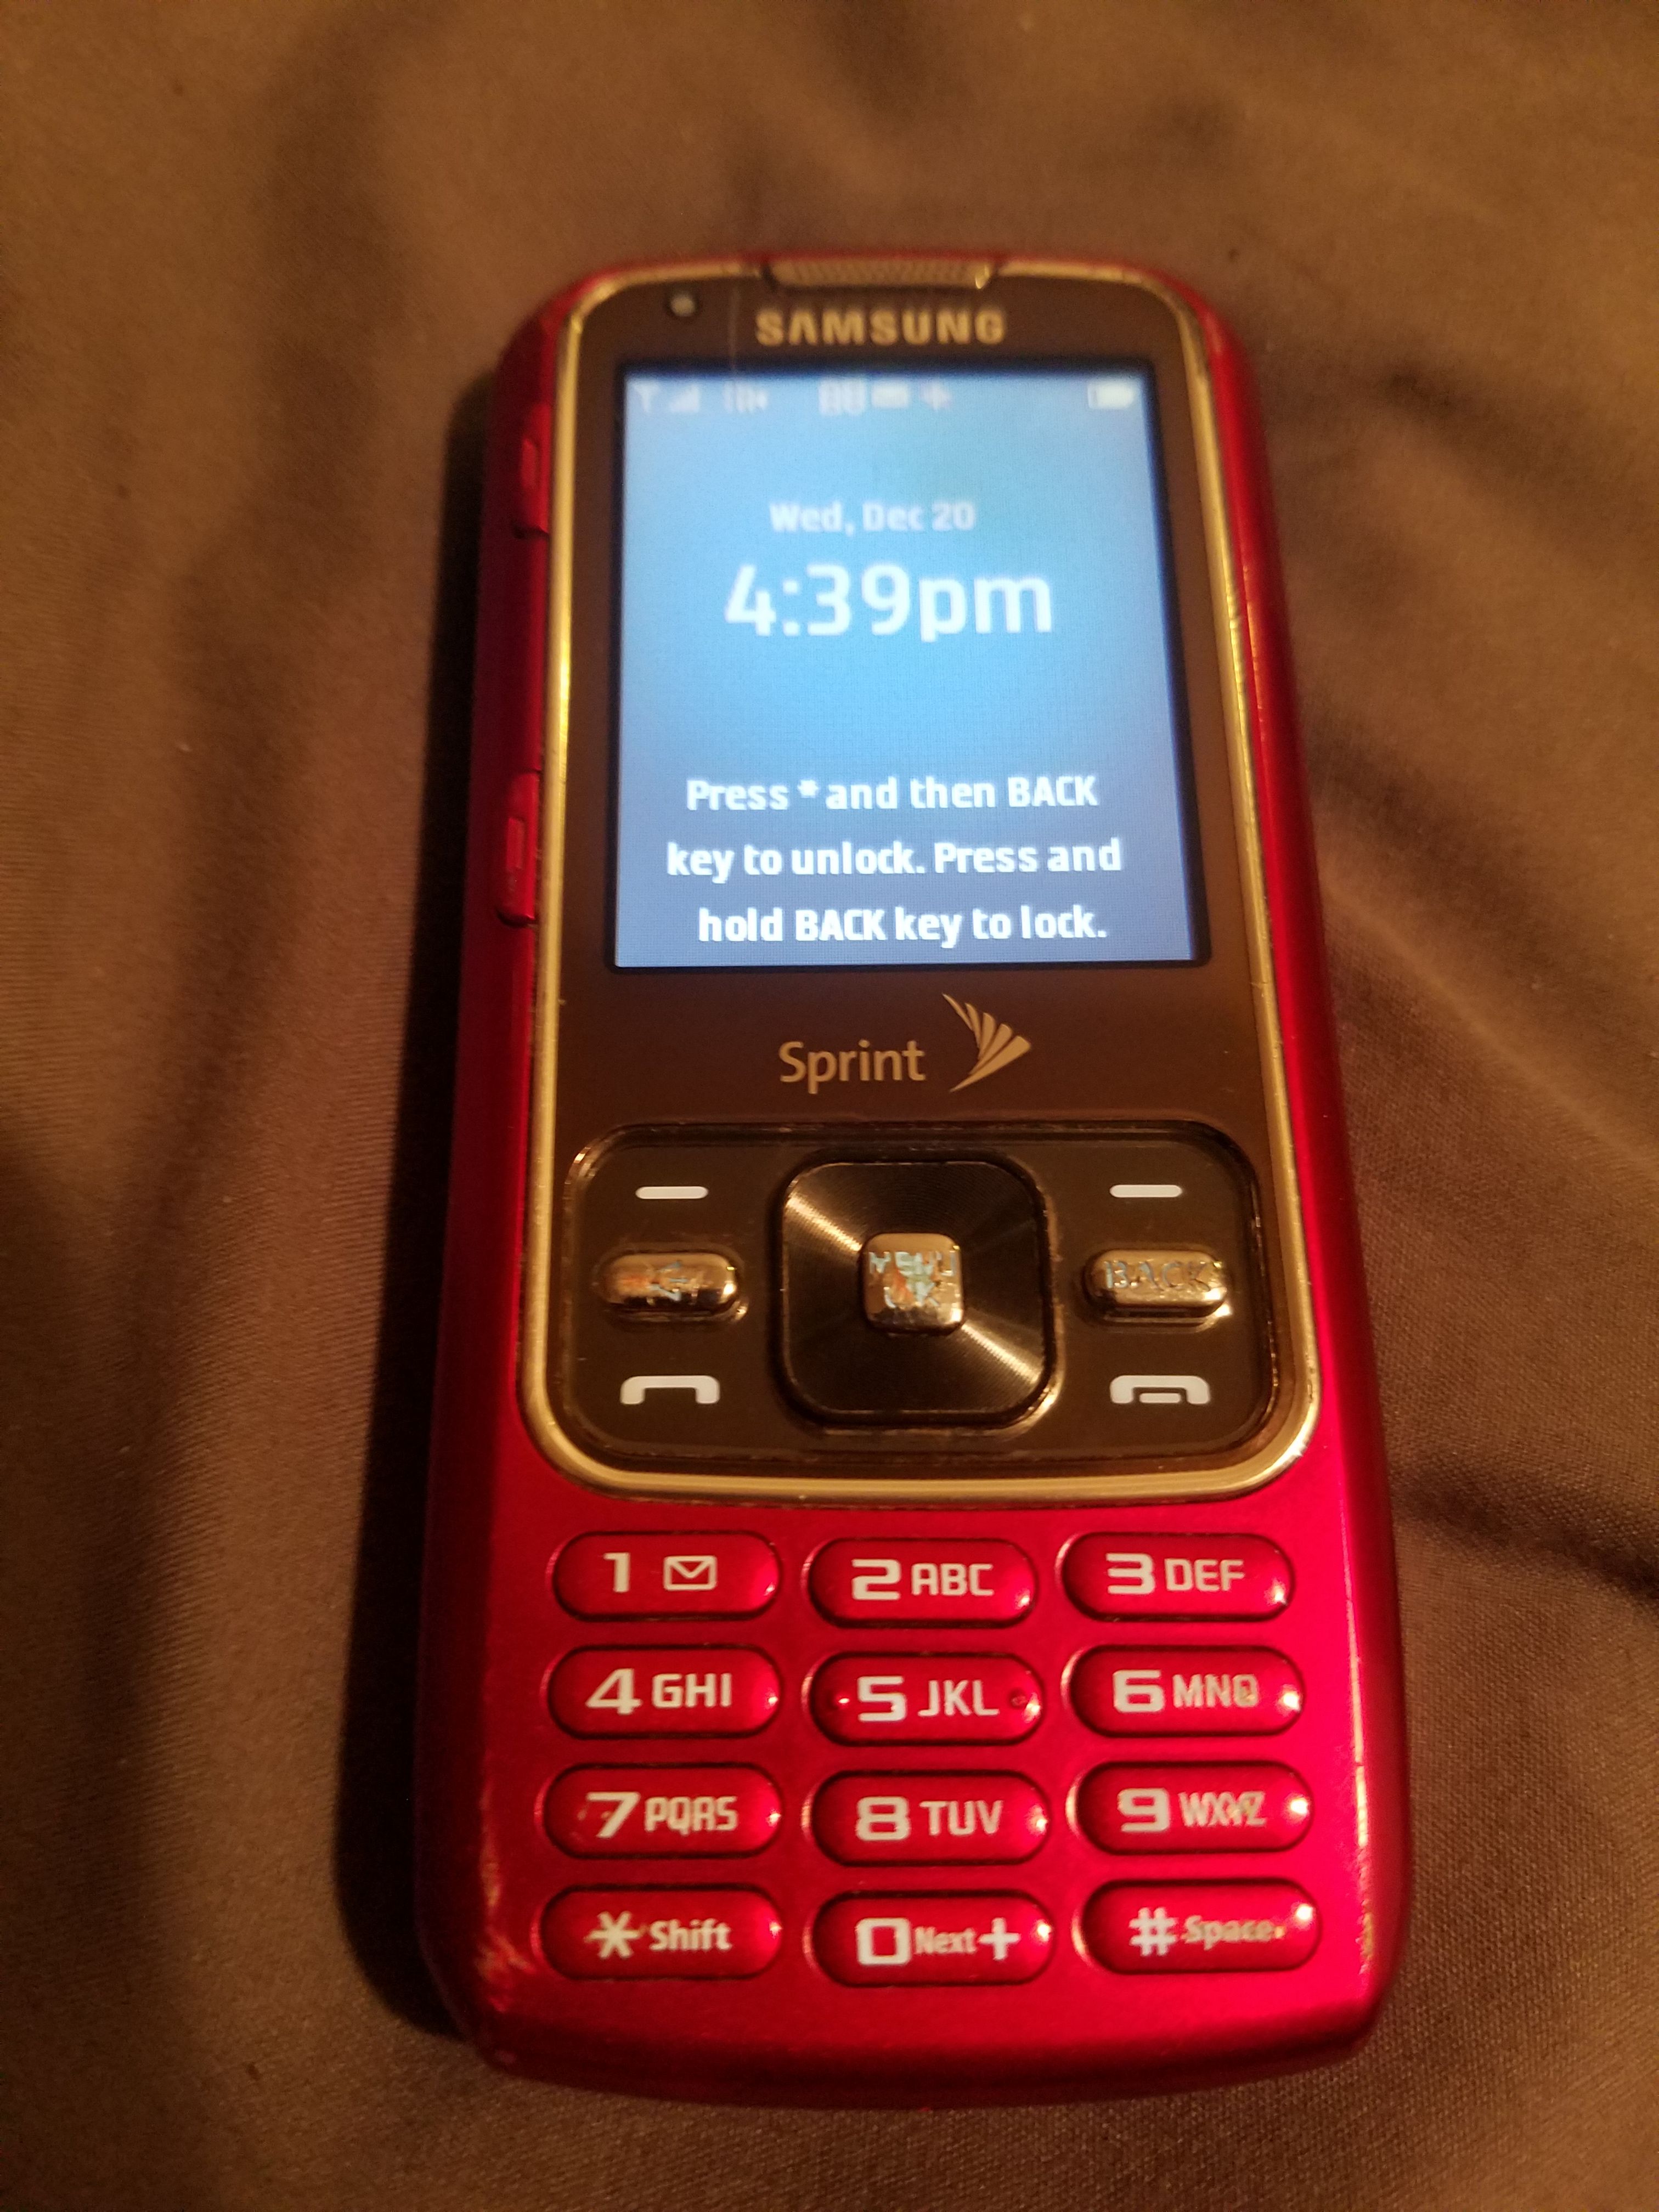 Samsung Rant Cell Phone for Sprint